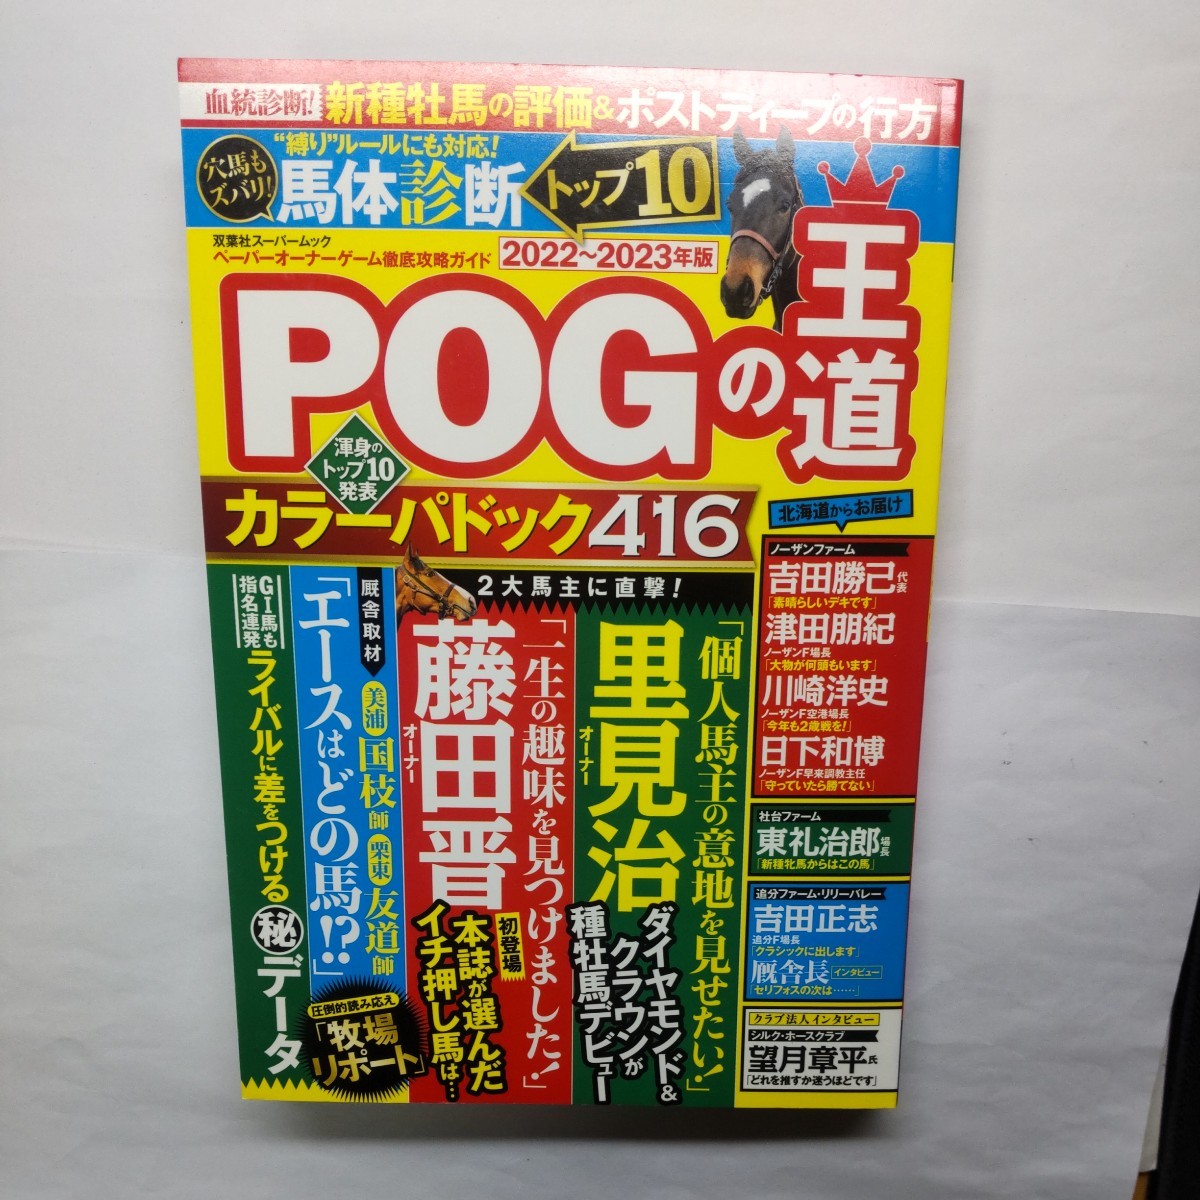 POGの王道 ペーパーオーナーゲーム徹底攻略ガイド 2022〜2023年版